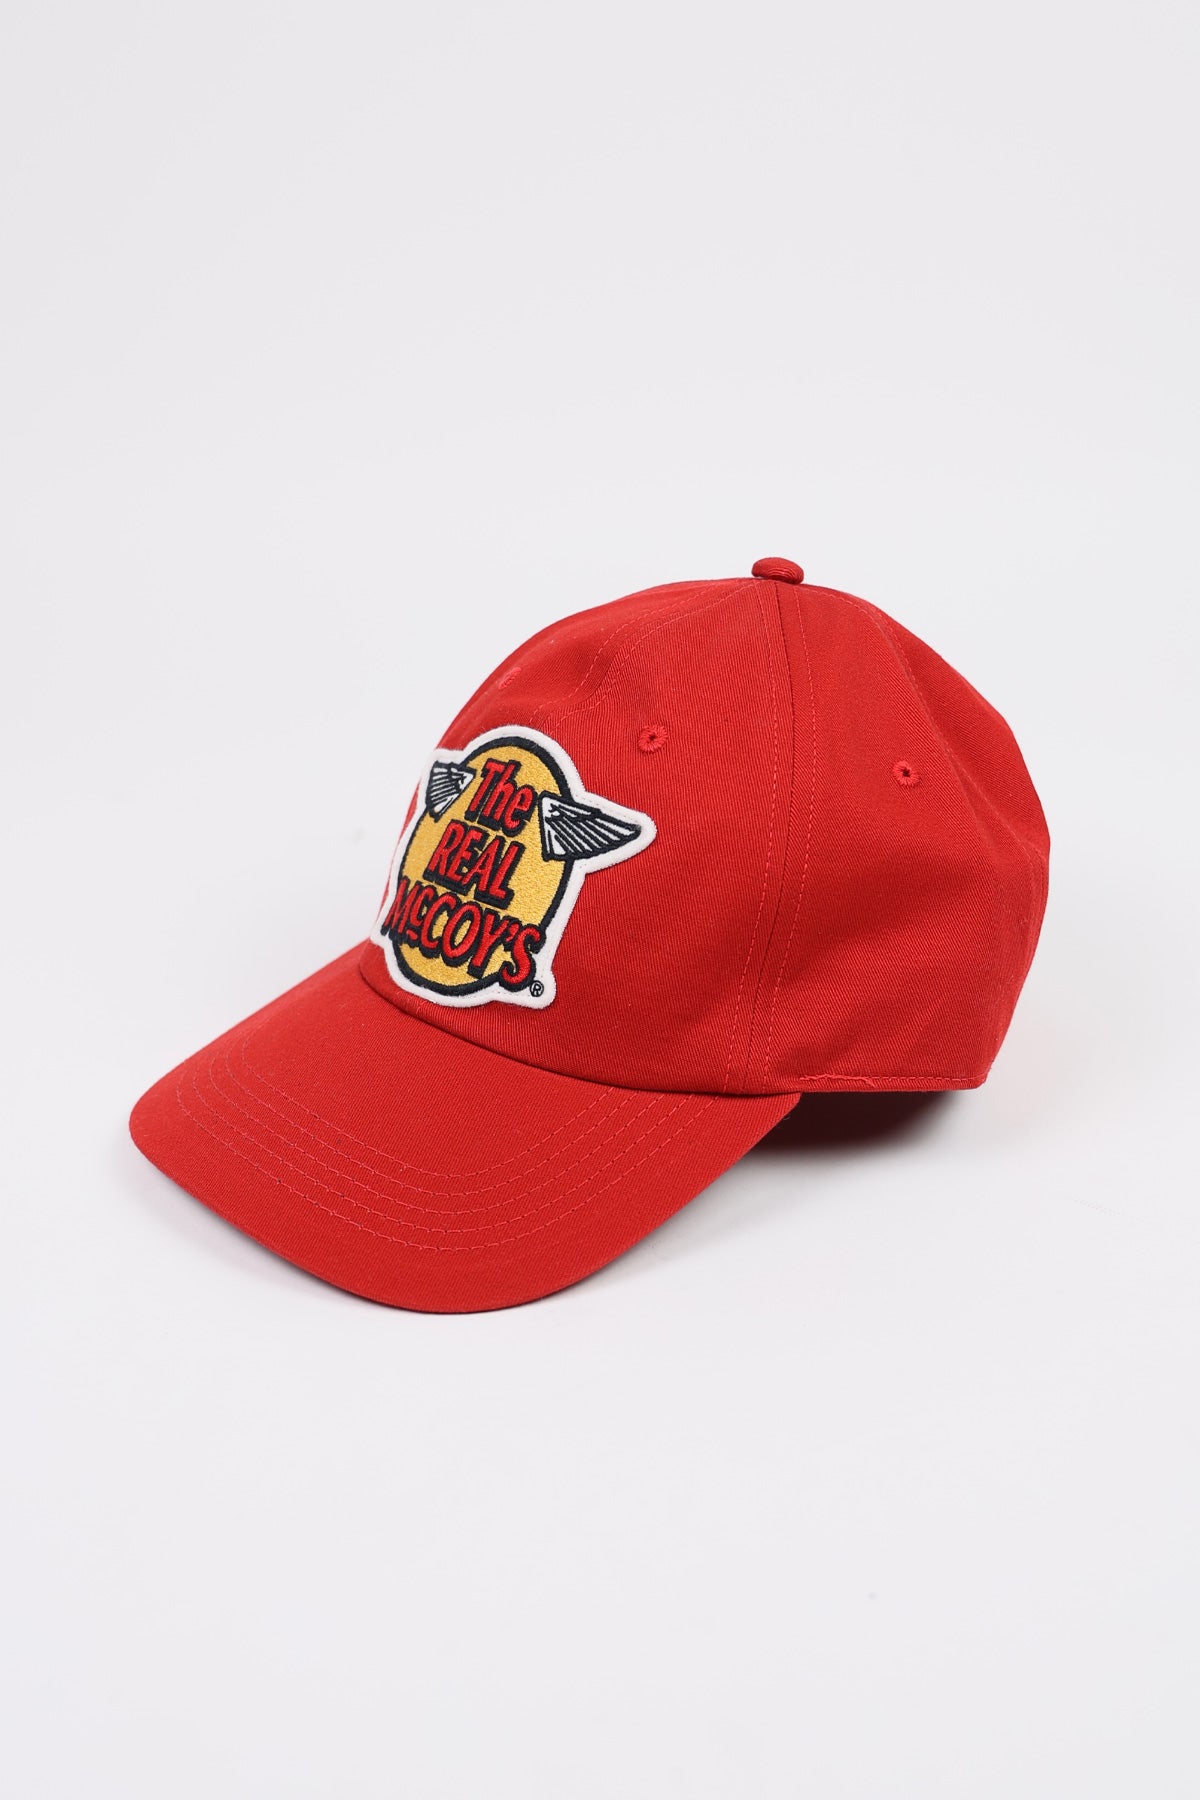 The Real McCoys Logo Baseball Cap | Red | Canoe Club